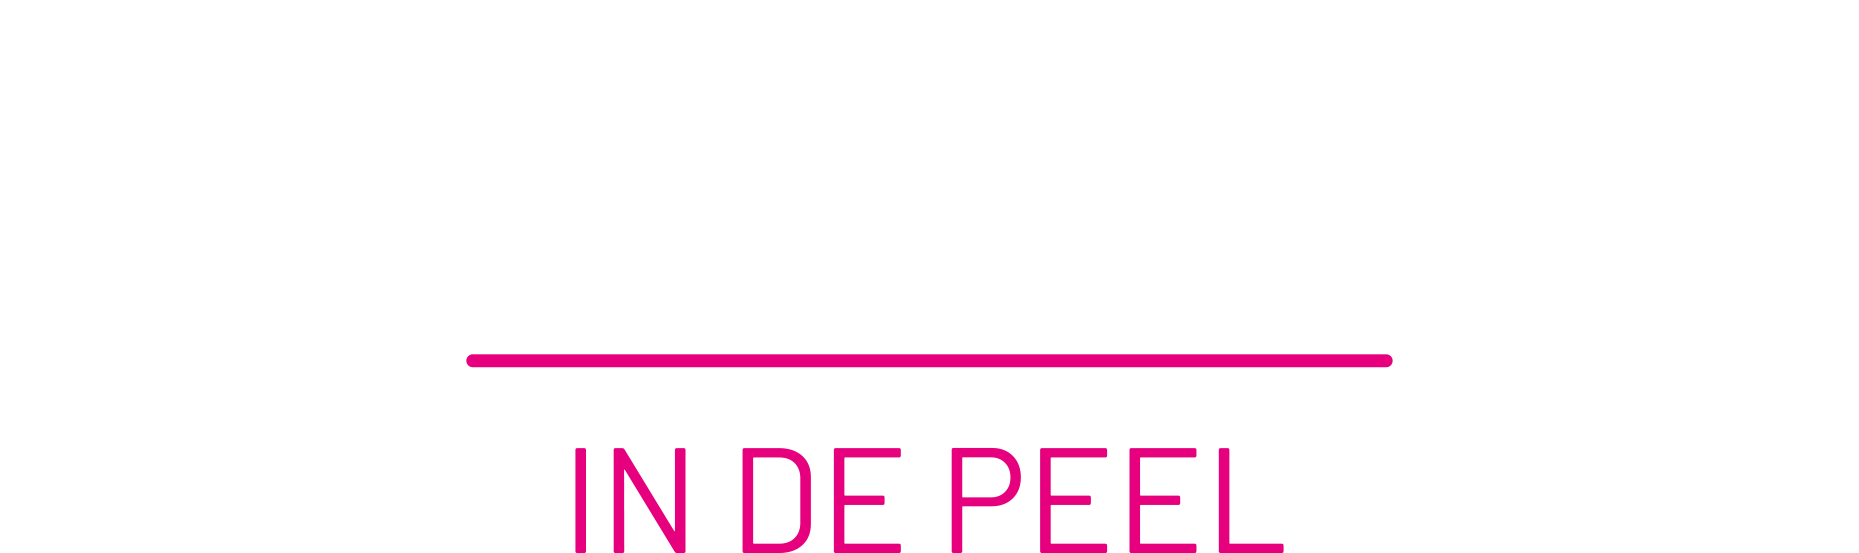 lasergameindepeel-logo